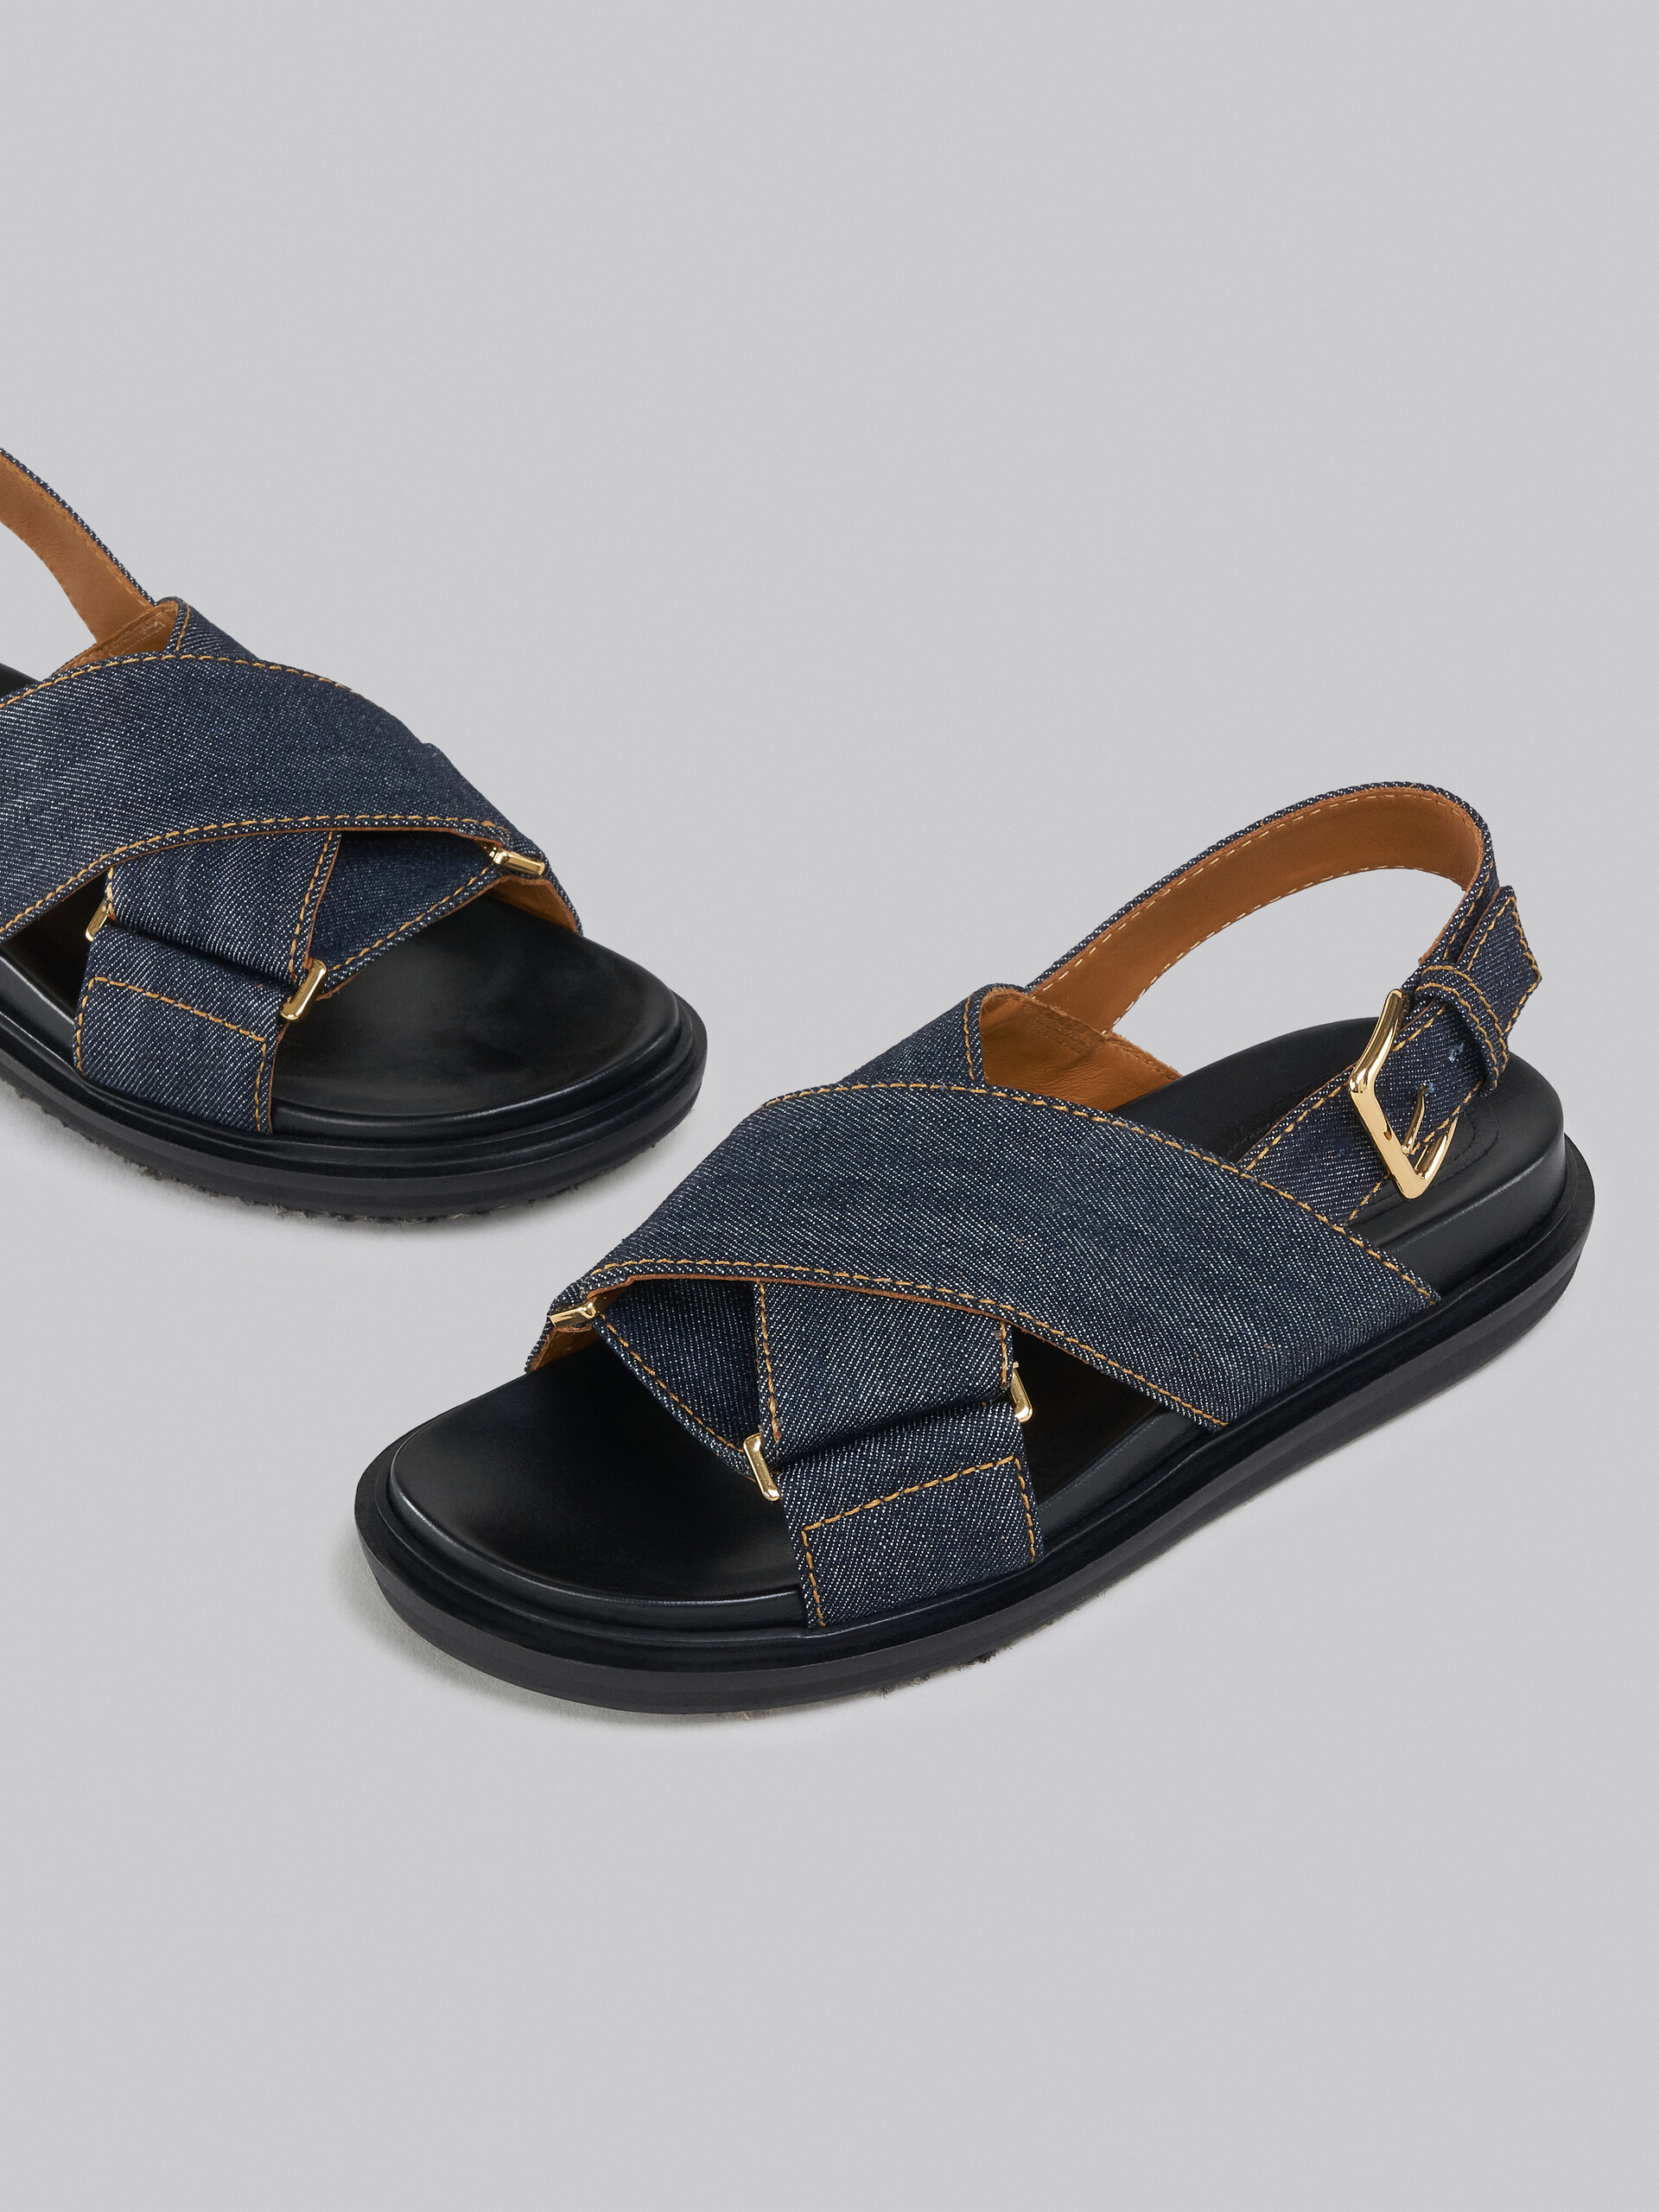 Blue denim criss-cross sandal - Sandals - Image 5